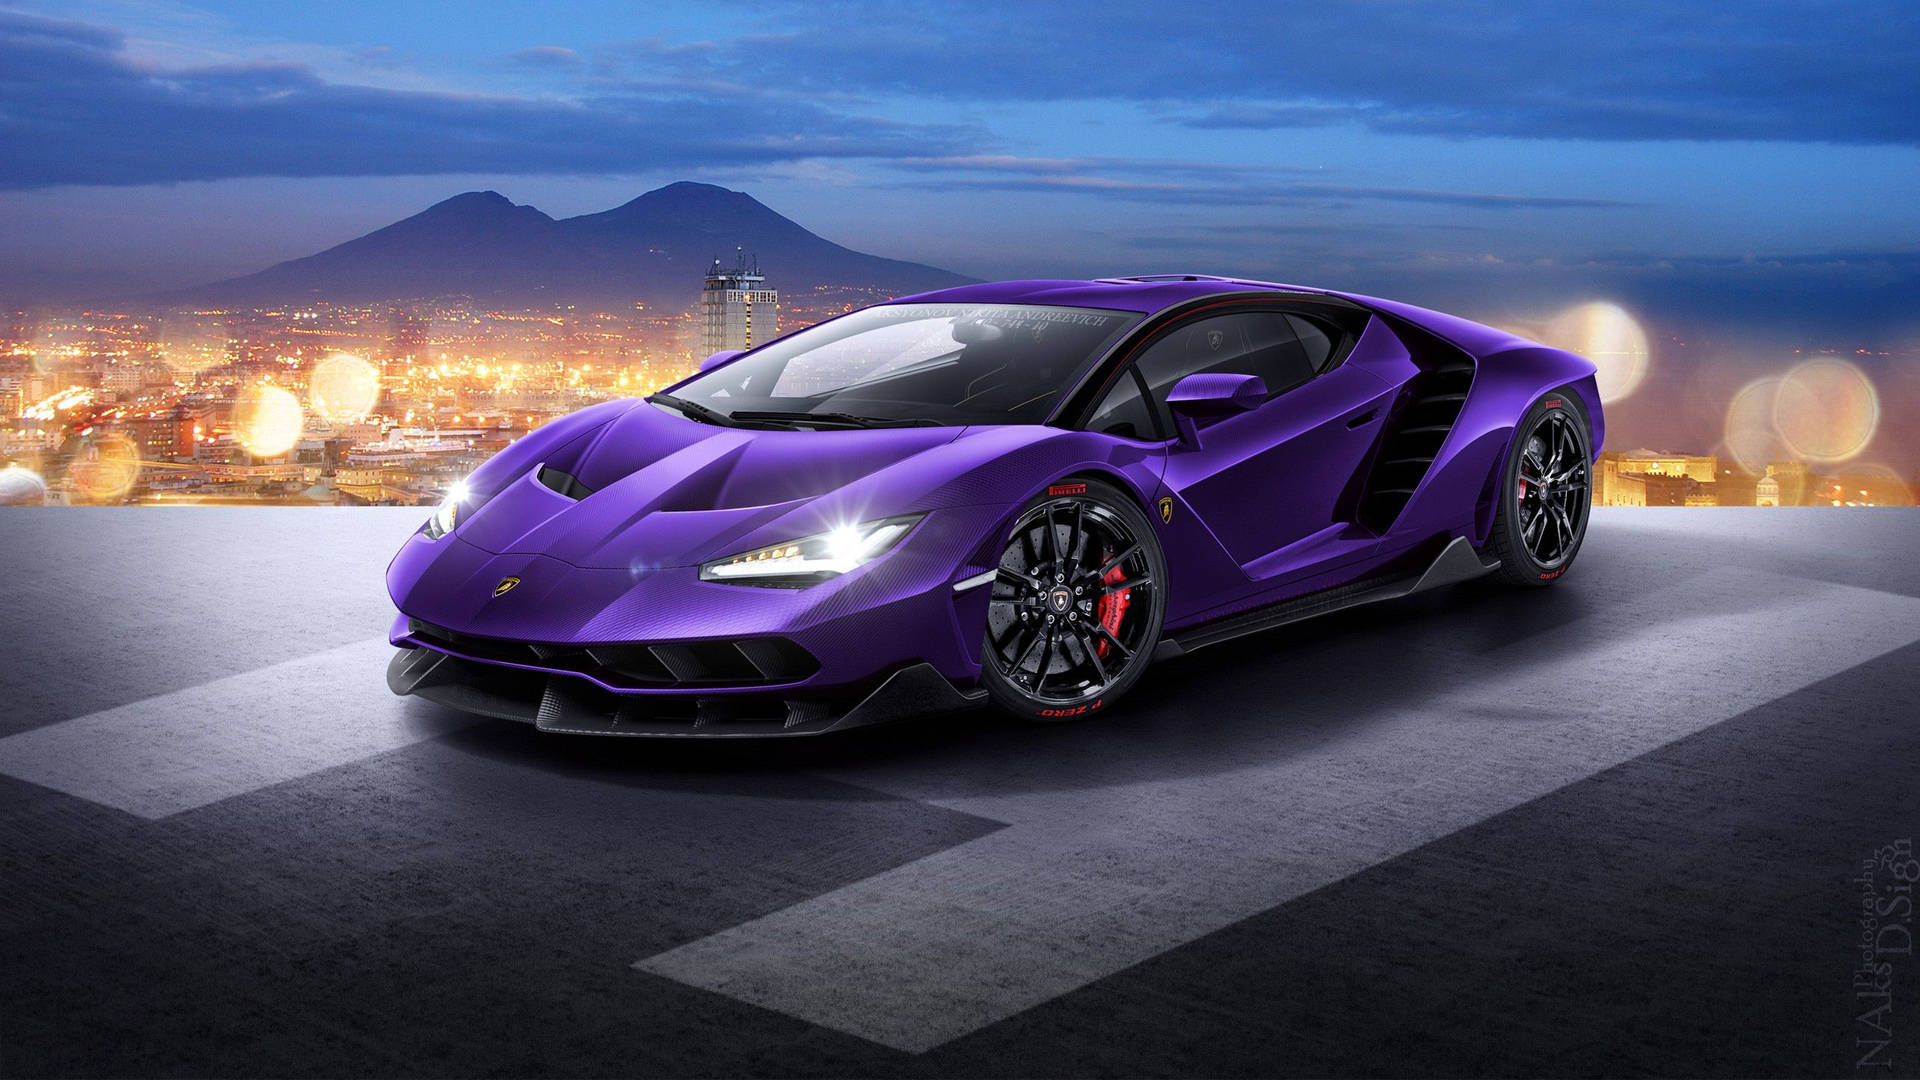 Cool Cars: Violet Lamborghini Wallpaper